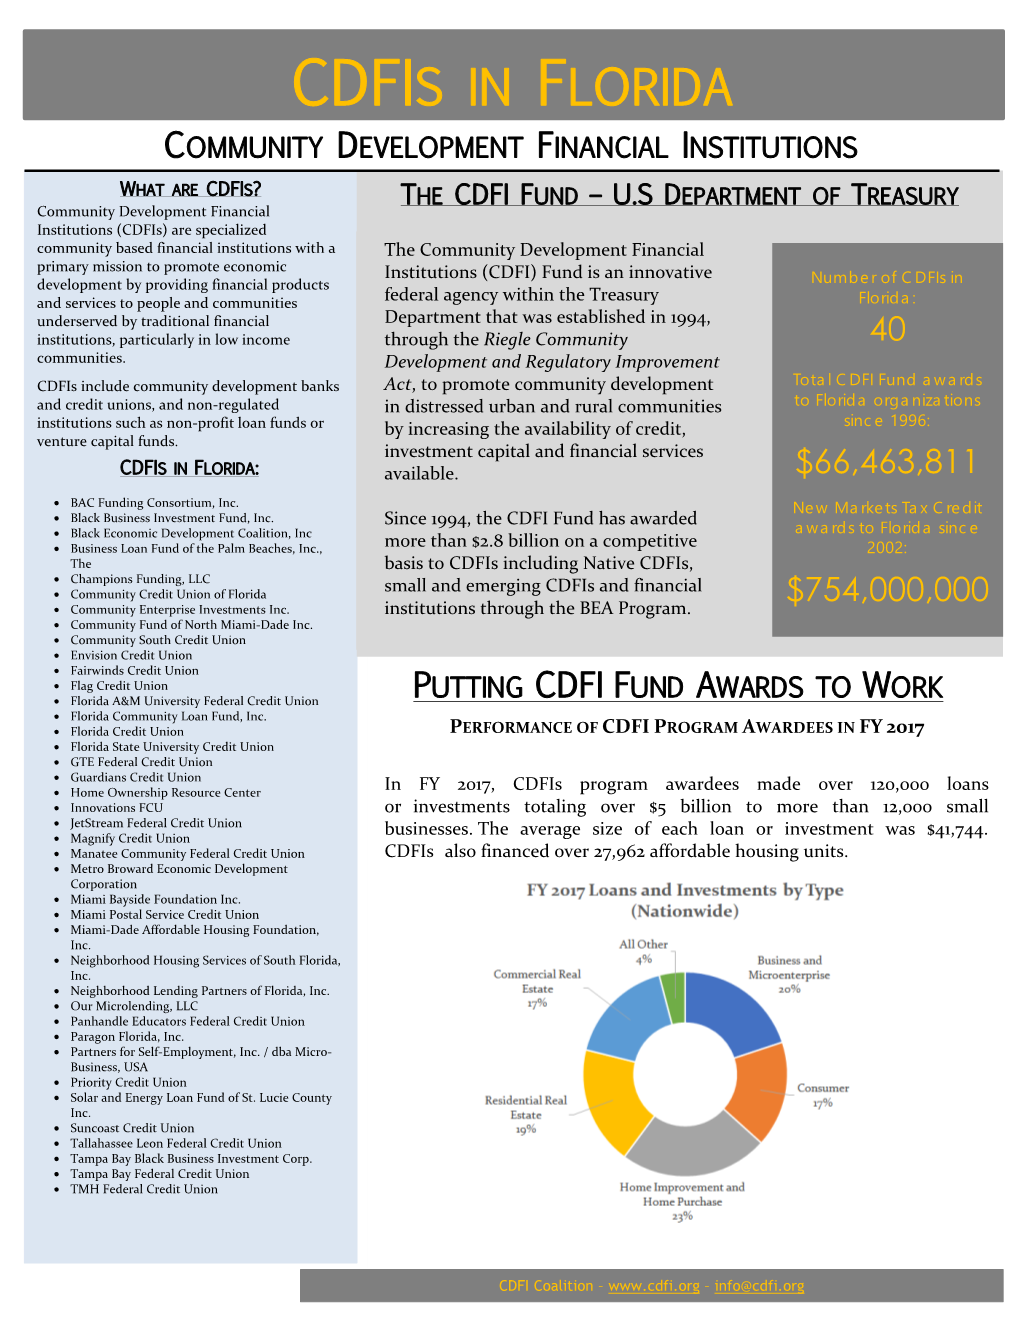 Cdfis in Florida Community Development Financial Institutions